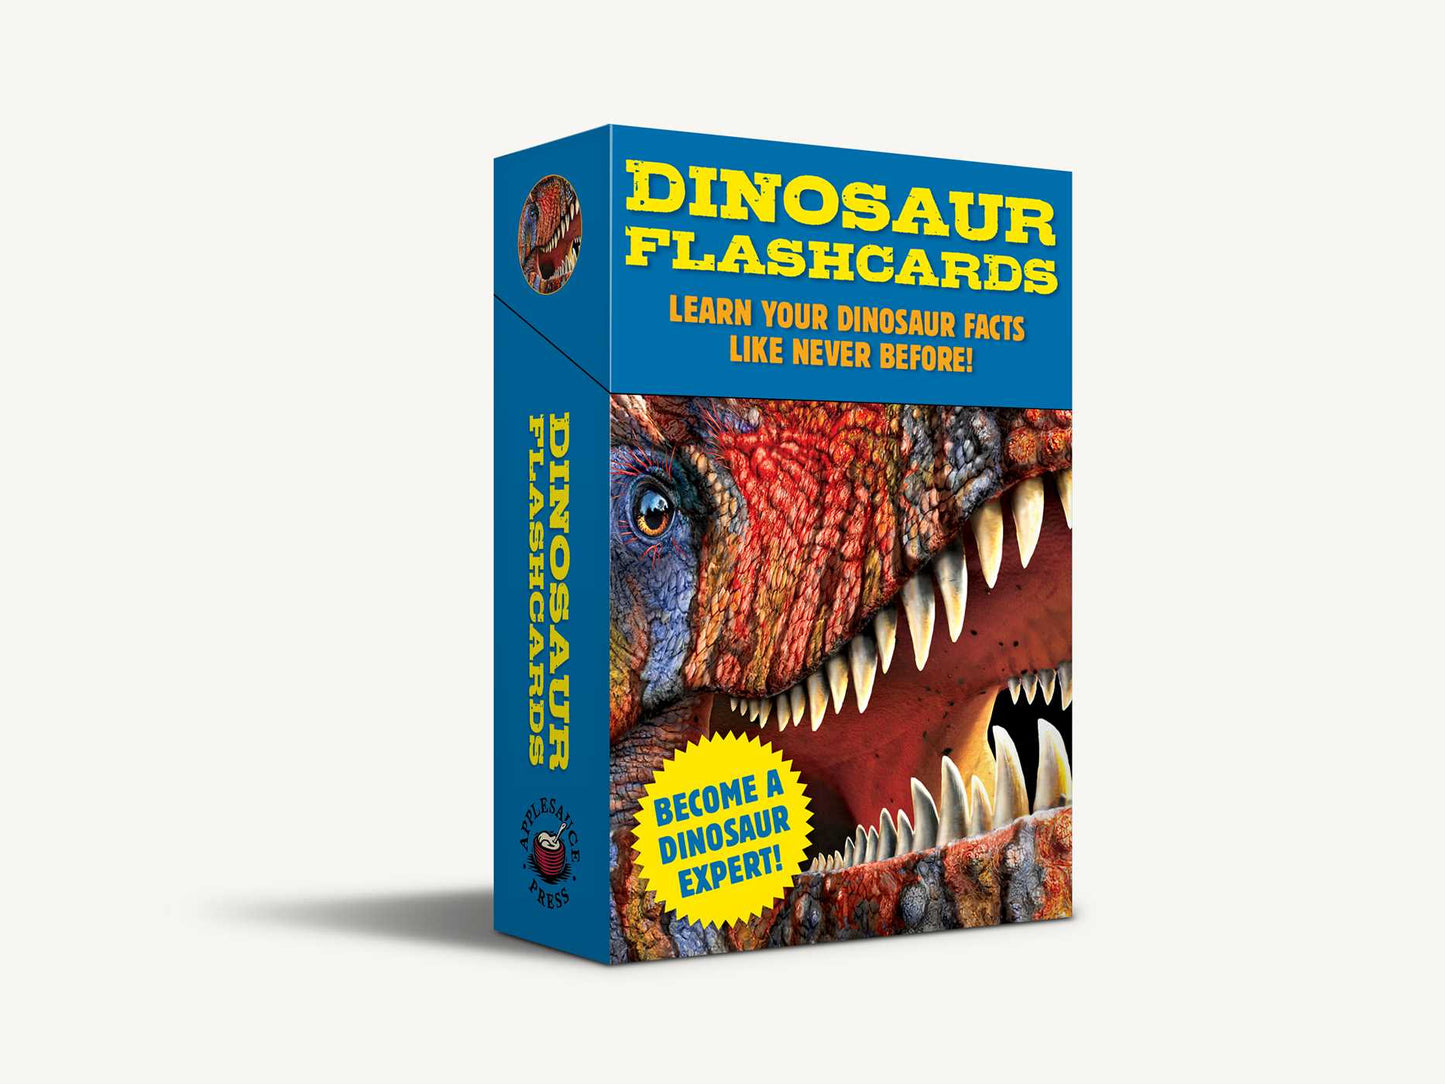 Dinosaur Flashcards: 60 Roaring Dinosaur Profiles!